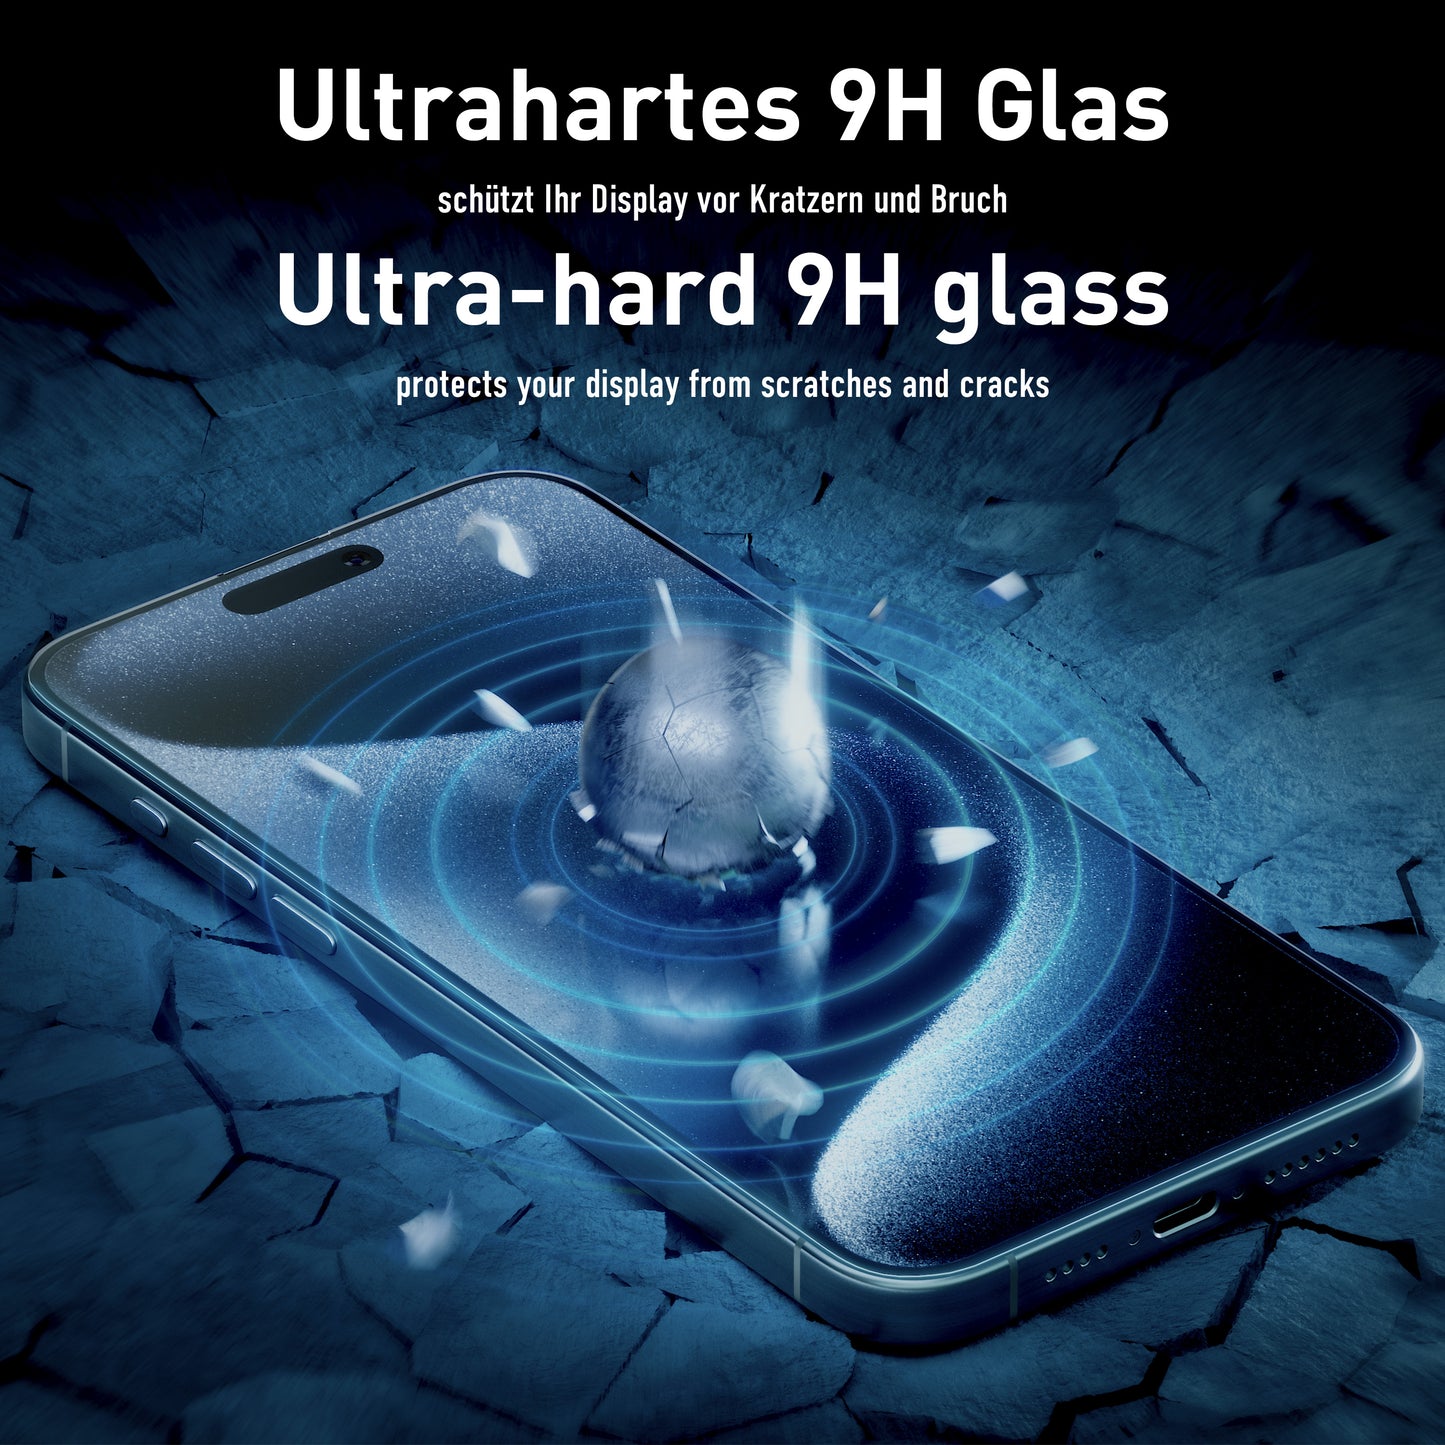 smartect Schutzglas Klar für Apple iPhone XS / iPhone X / iPhone 11 Pro, 3 Stück